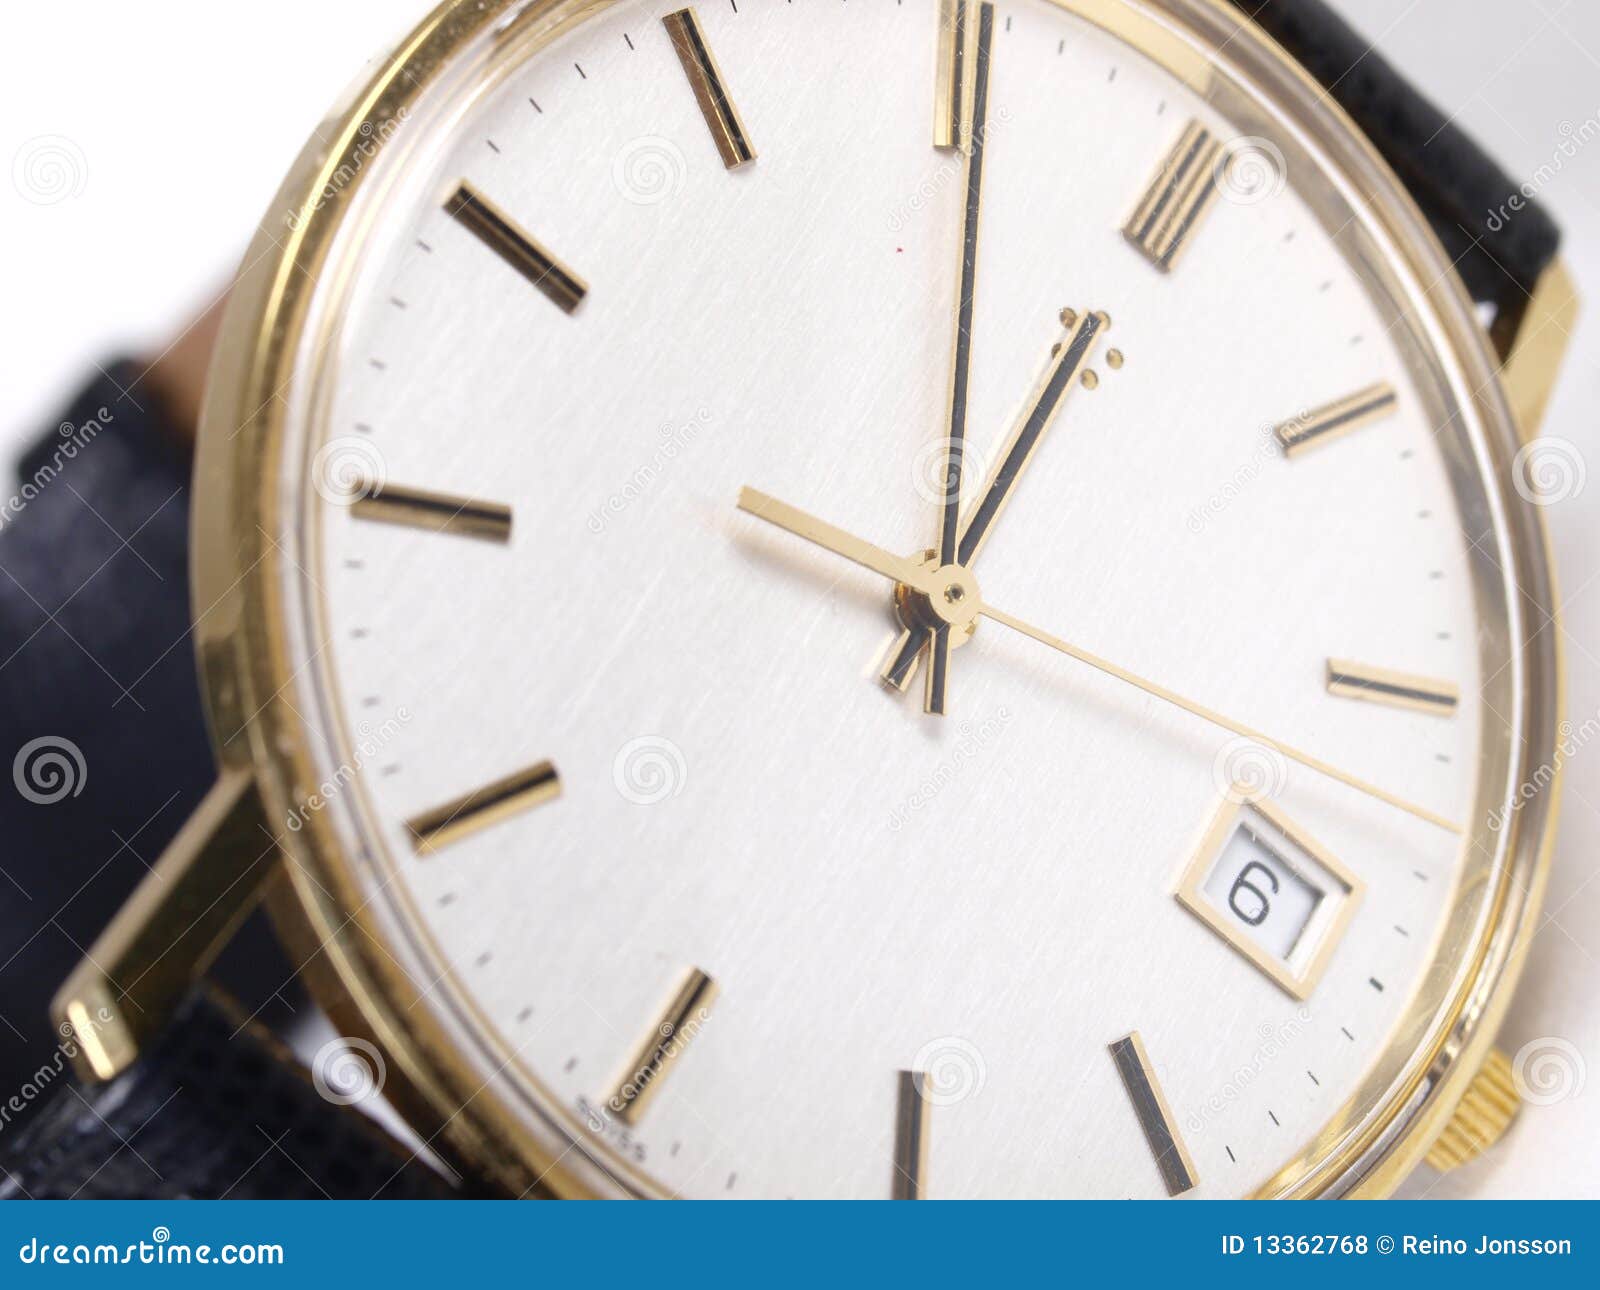 Gold watch stock photo. Image of metal, watch, luxury - 13362768